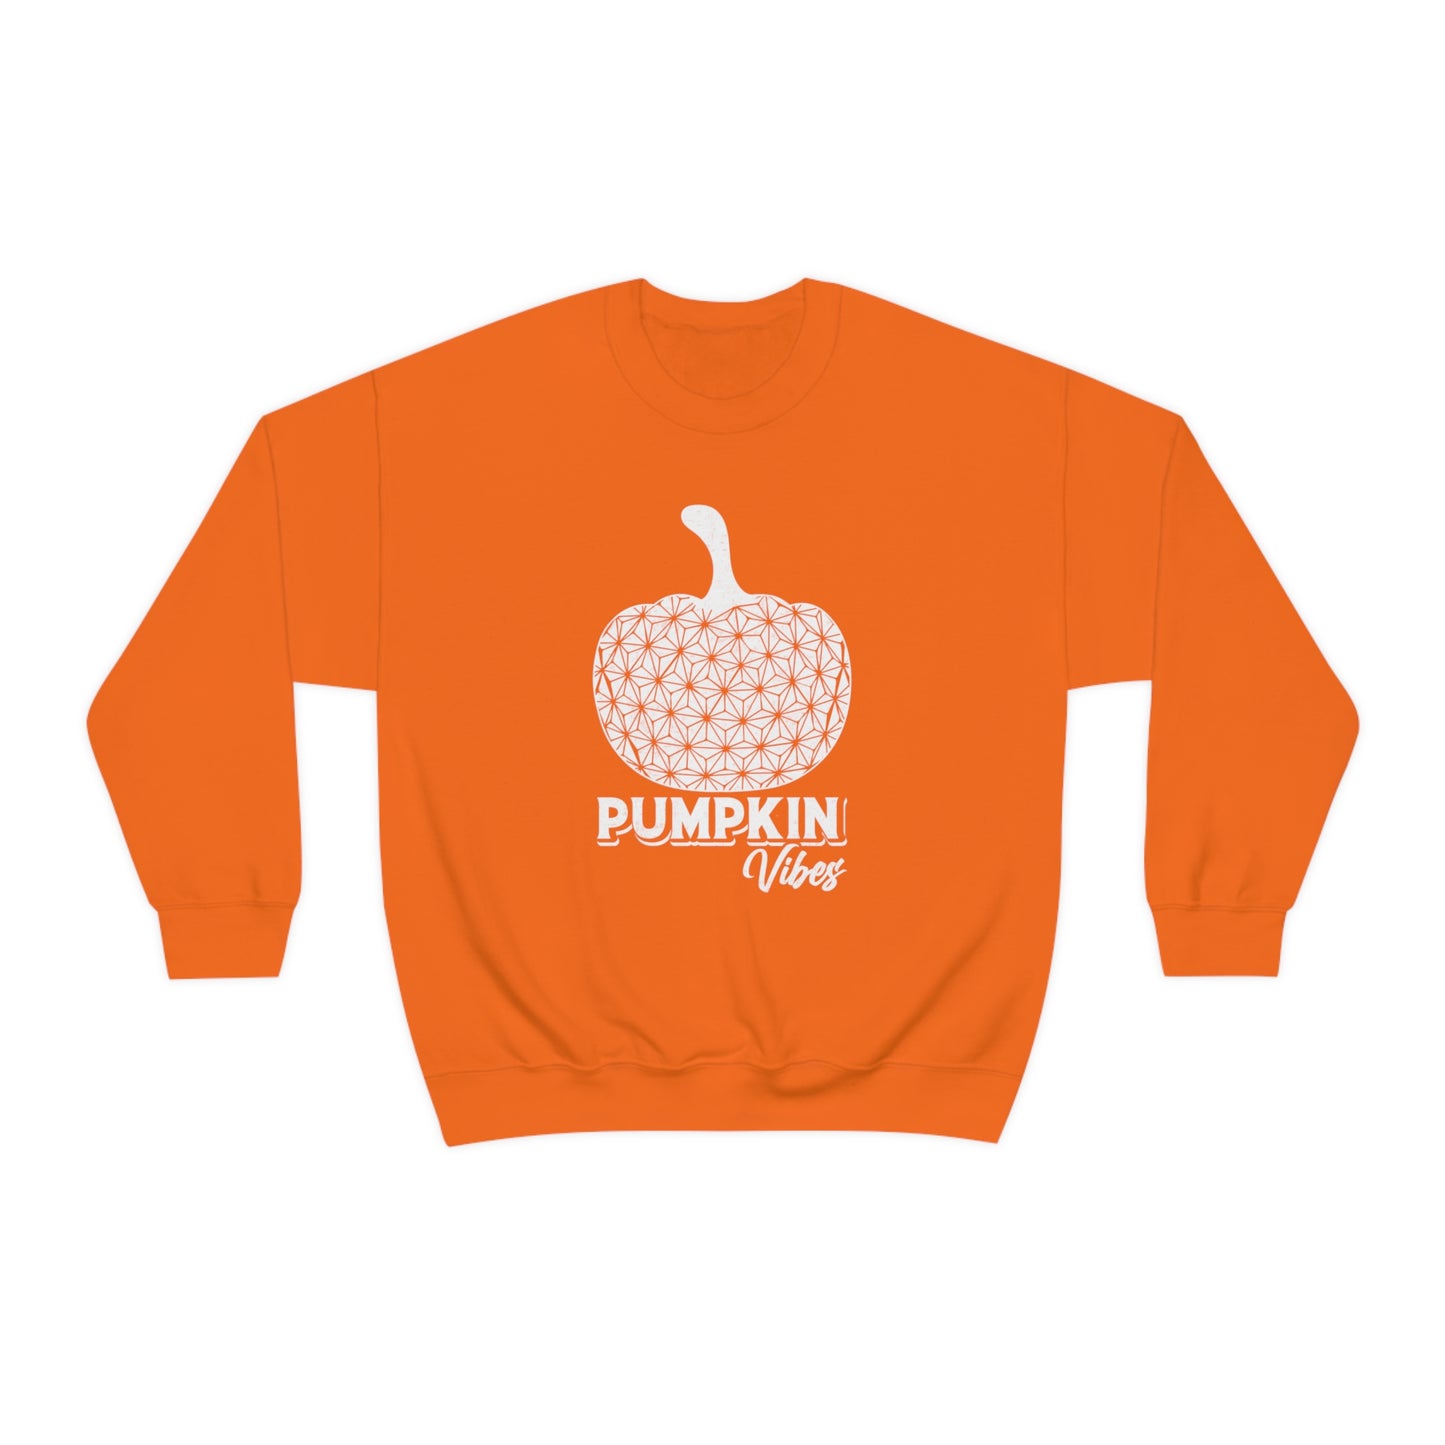 Pumpkin Vibes EPCOT Spaceship Earth - Adult Crewneck Sweatshirt